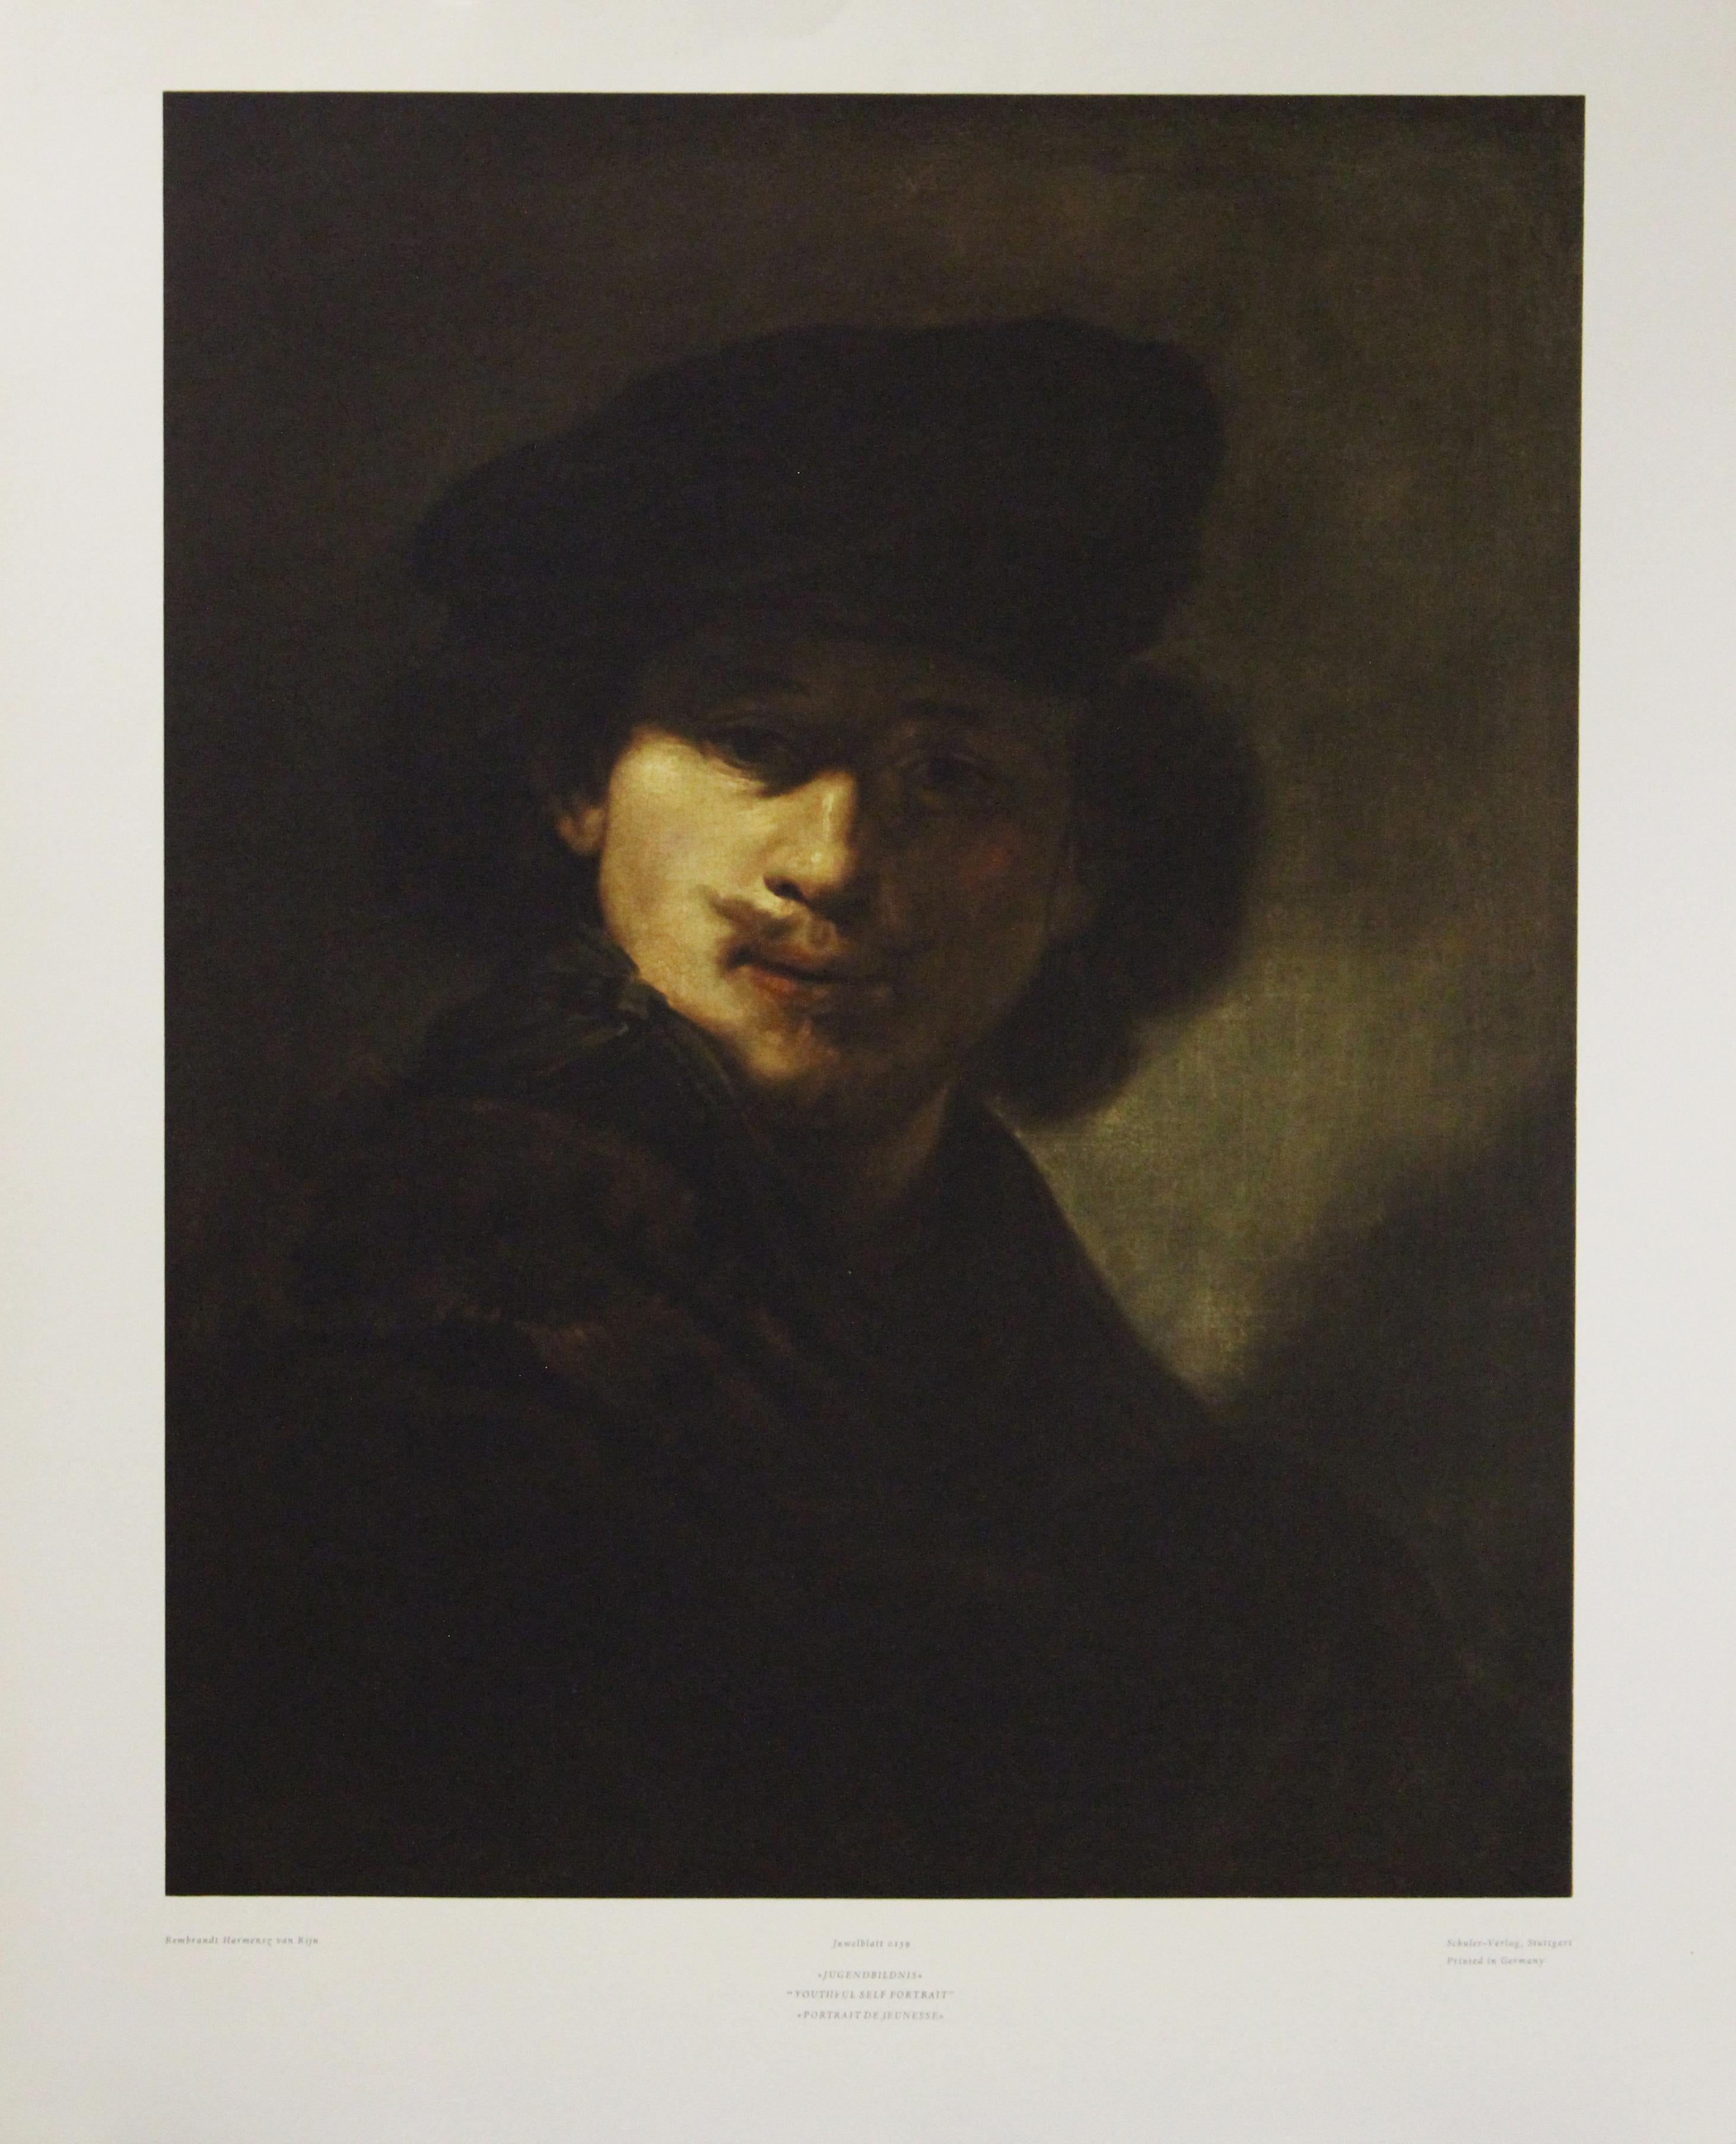 (After) Rembrandt van Rijn  Portrait Print – Youthful Self Portrait-Poster. Gedruckt in Deutschland. 